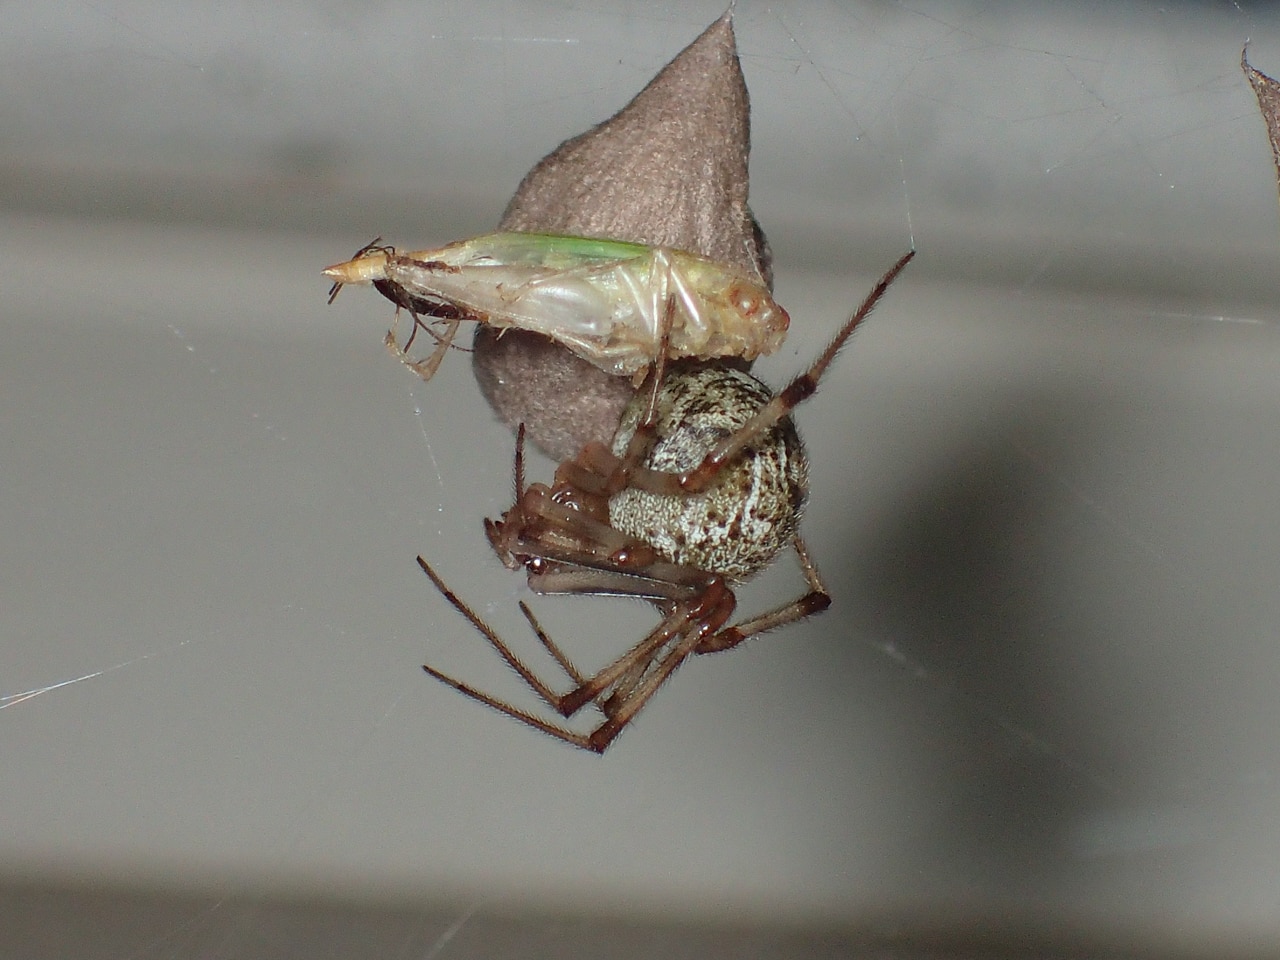 Picture of Parasteatoda tepidariorum (Common House Spider) - Female - Egg sacs,Lateral,Webs,Prey